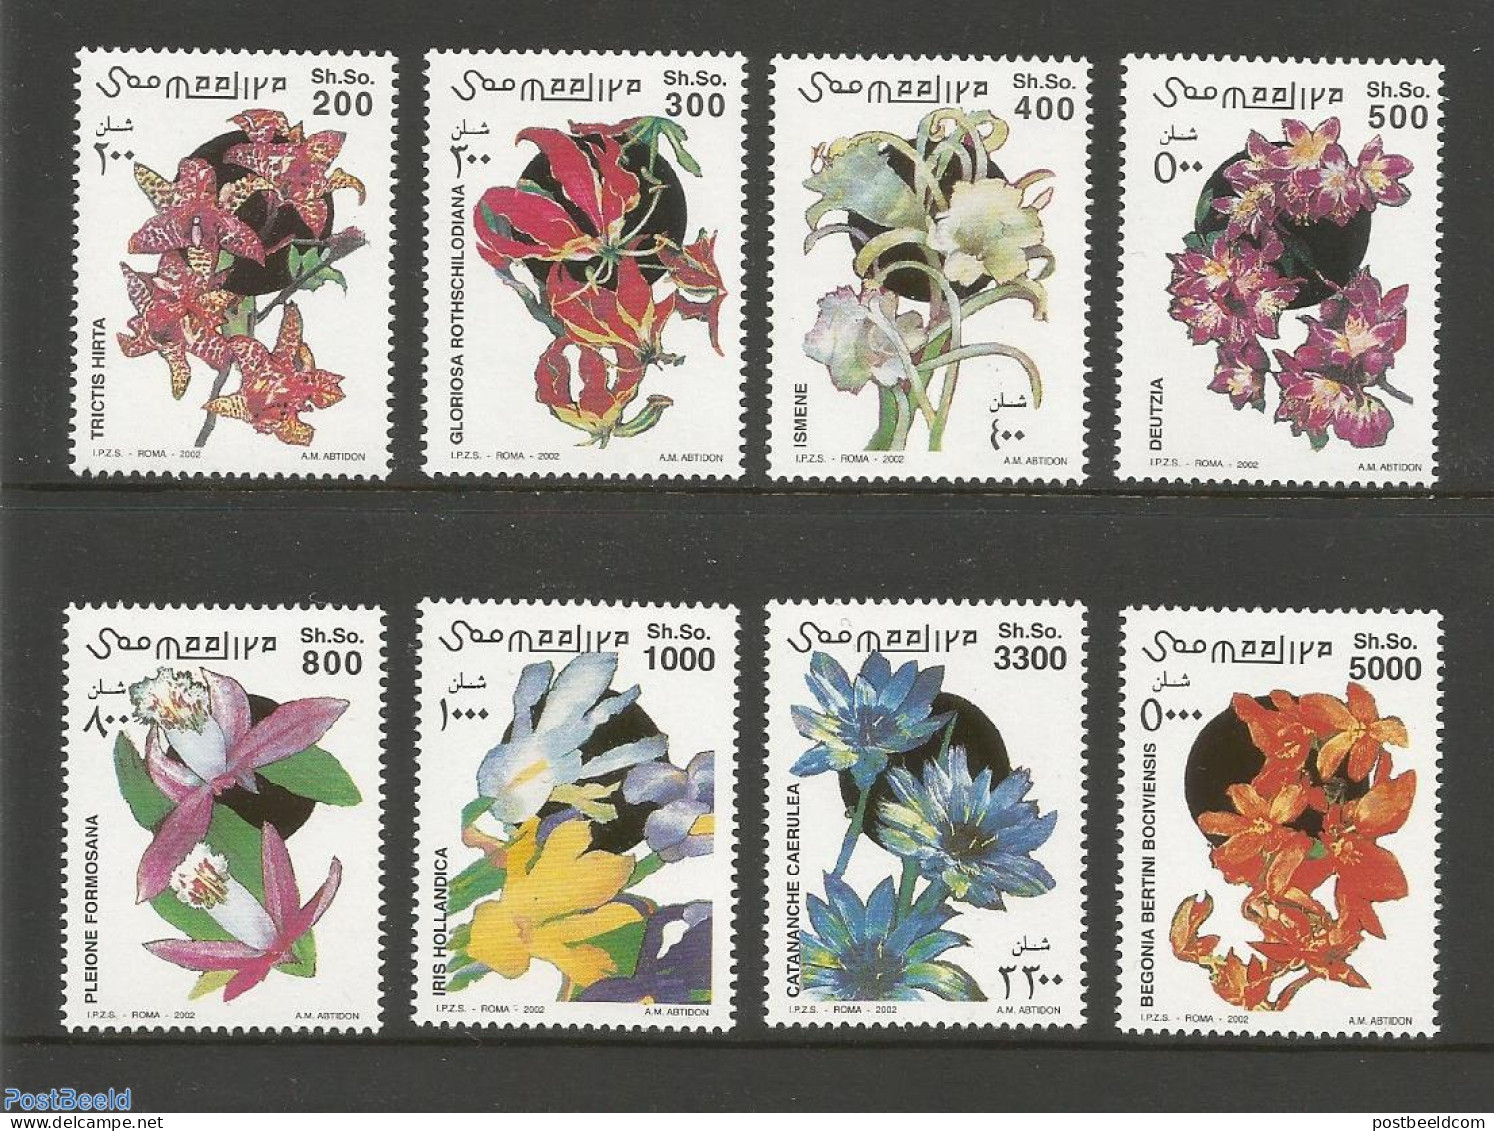 Somalia 2002 Flowers 8v, Mint NH, Nature - Flowers & Plants - Somalia (1960-...)